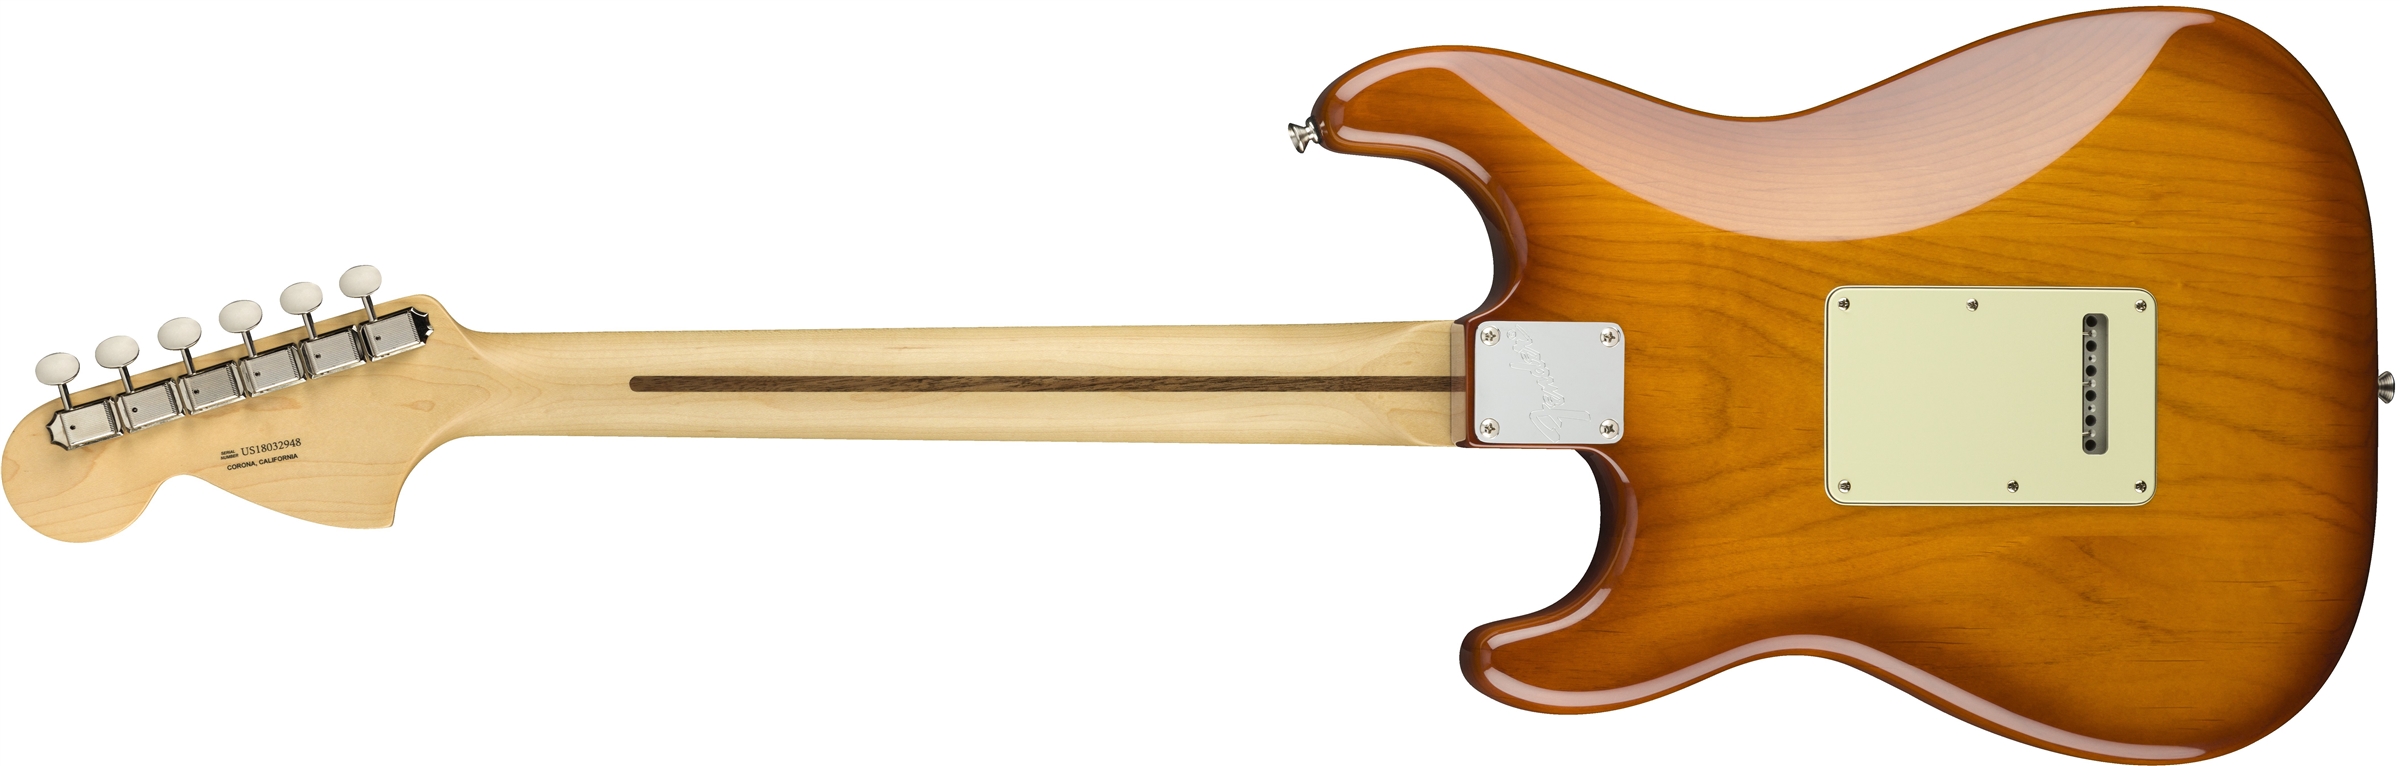 American Performer Stratocaster Honey Burst背面画像